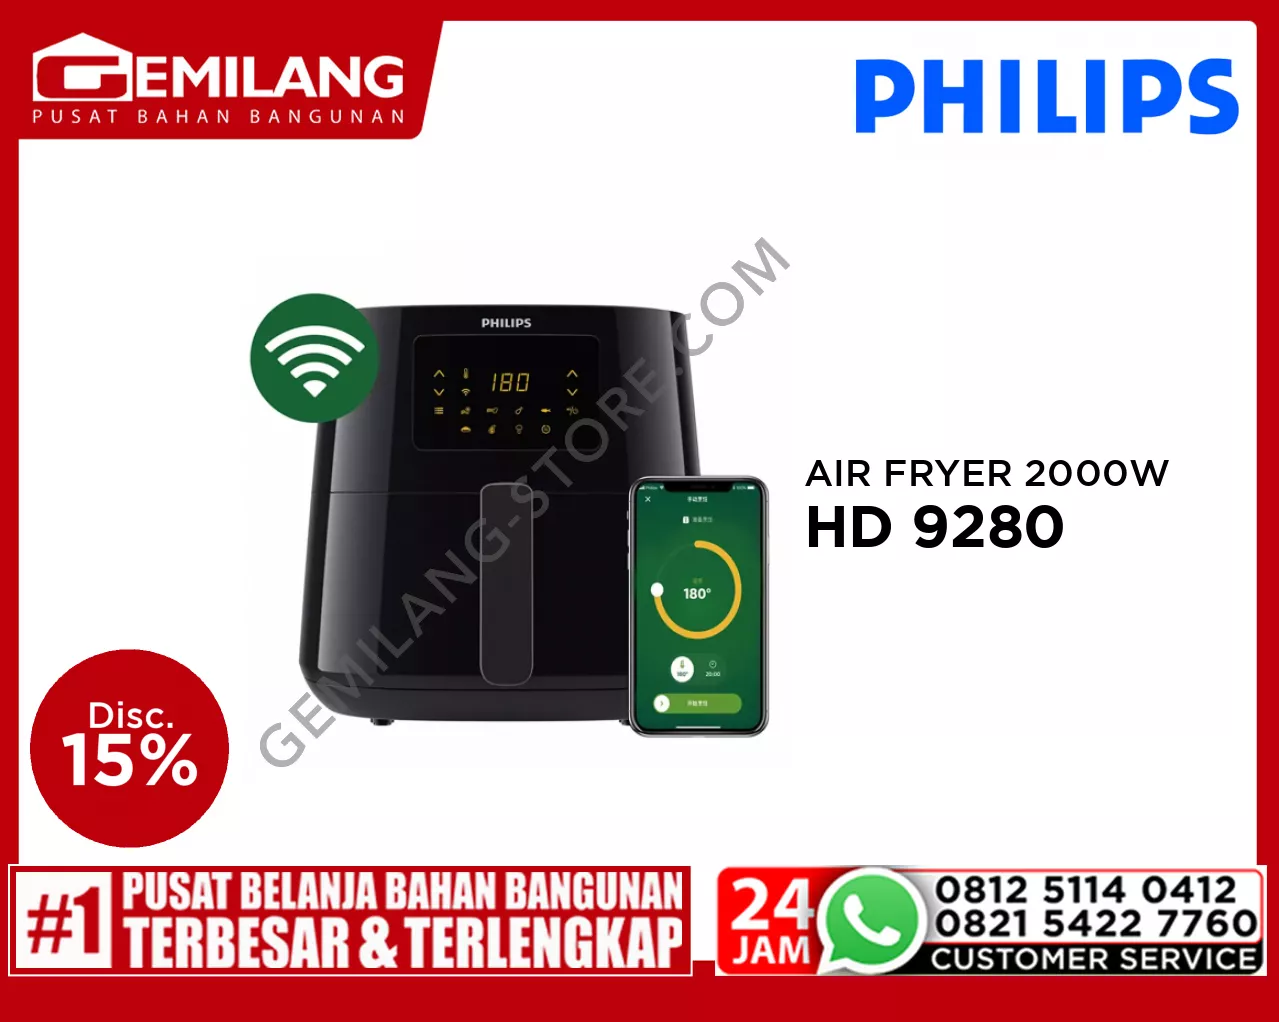 PHILIPS AIR FRYER HD 9280